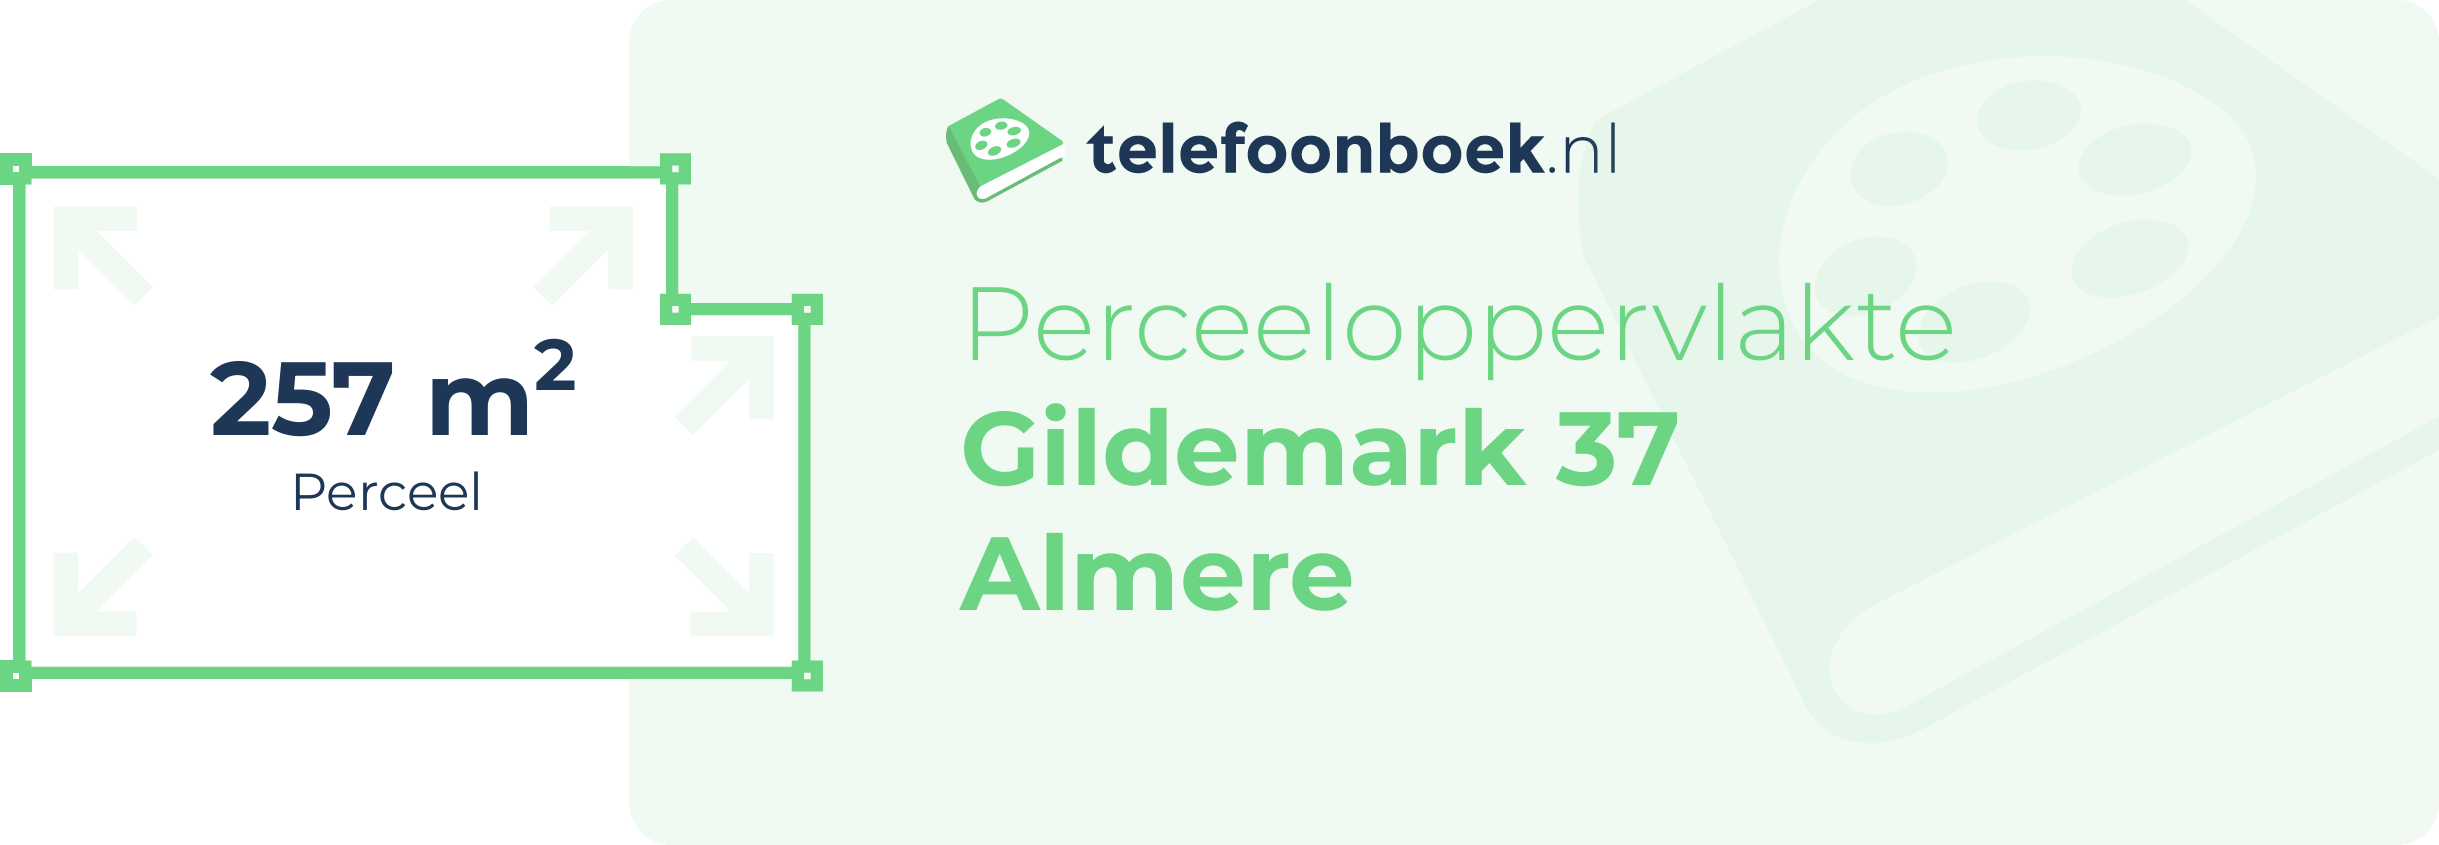 Perceeloppervlakte Gildemark 37 Almere